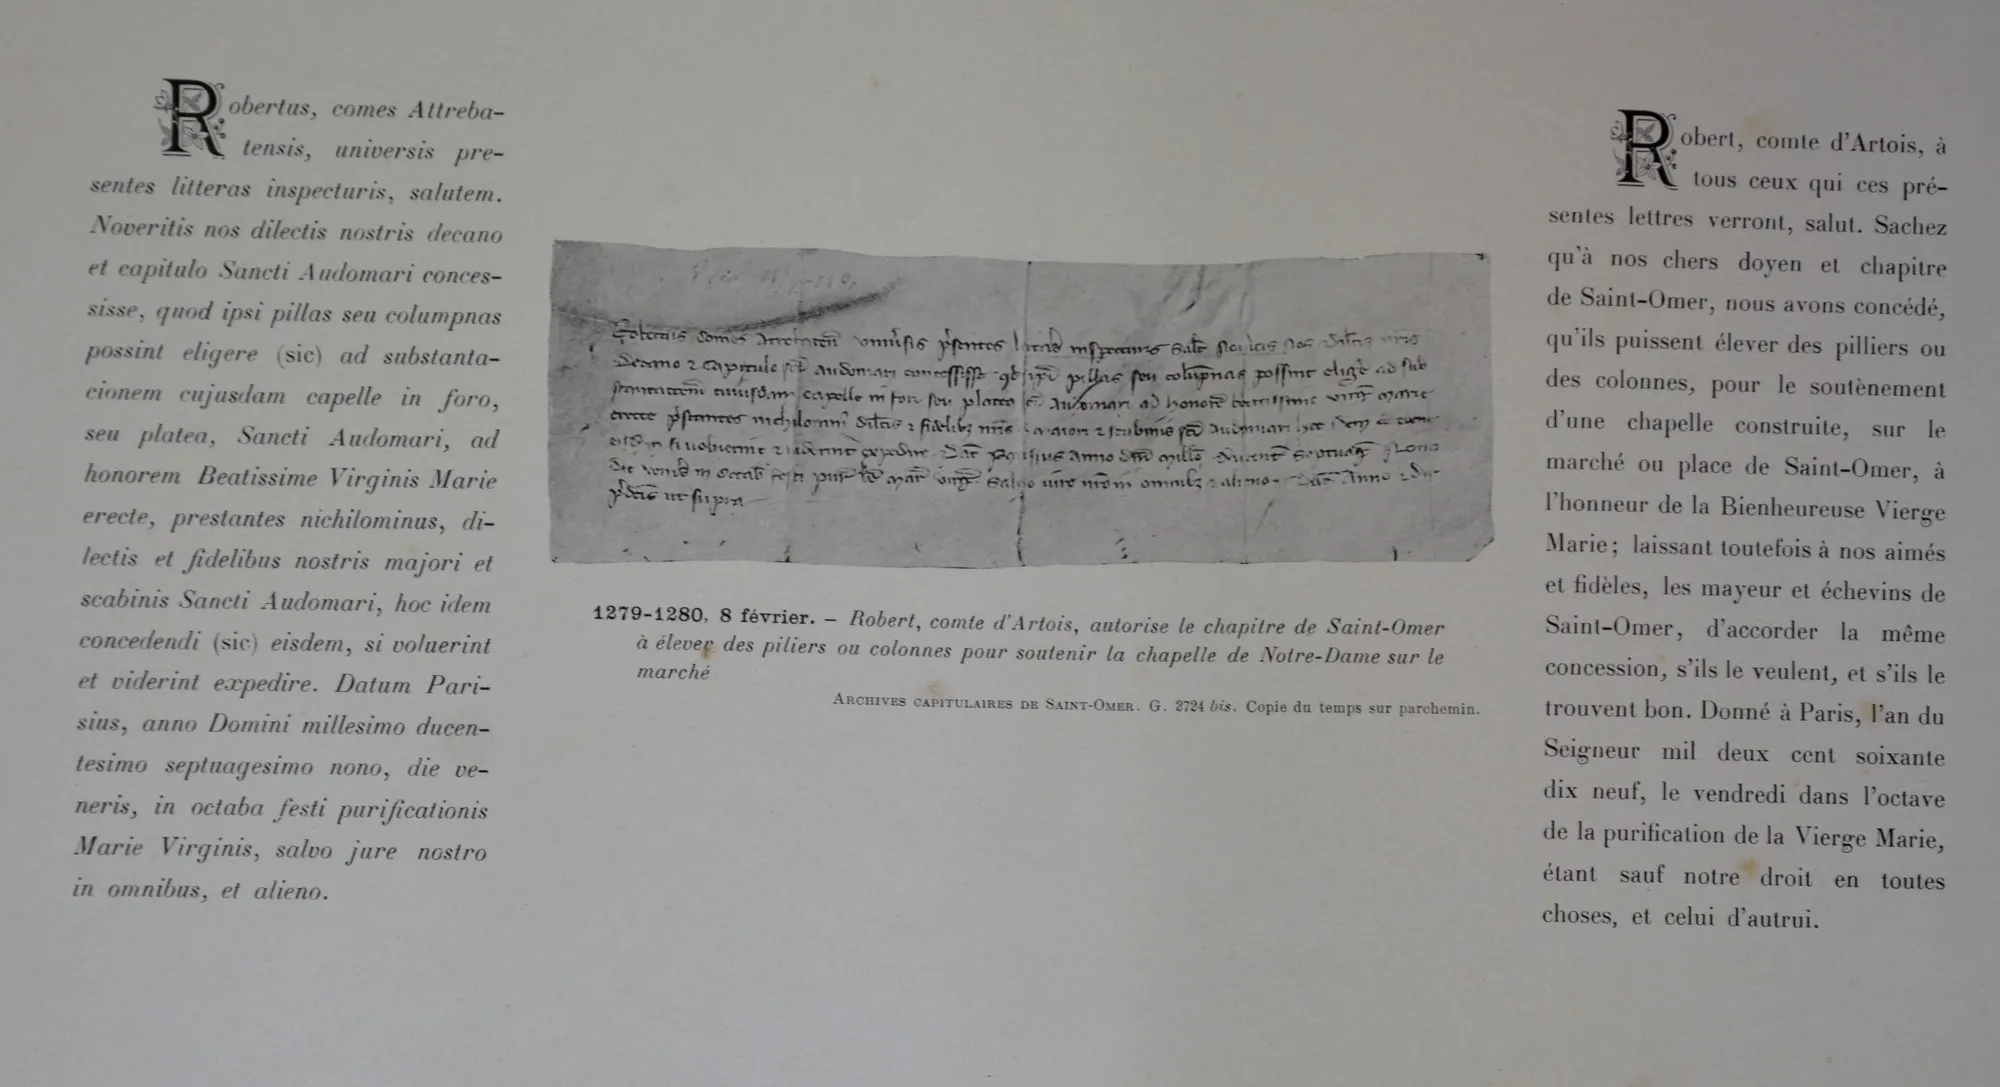 Charte de Robert d'Artois Novembre 1271 Février 1279 - 1280